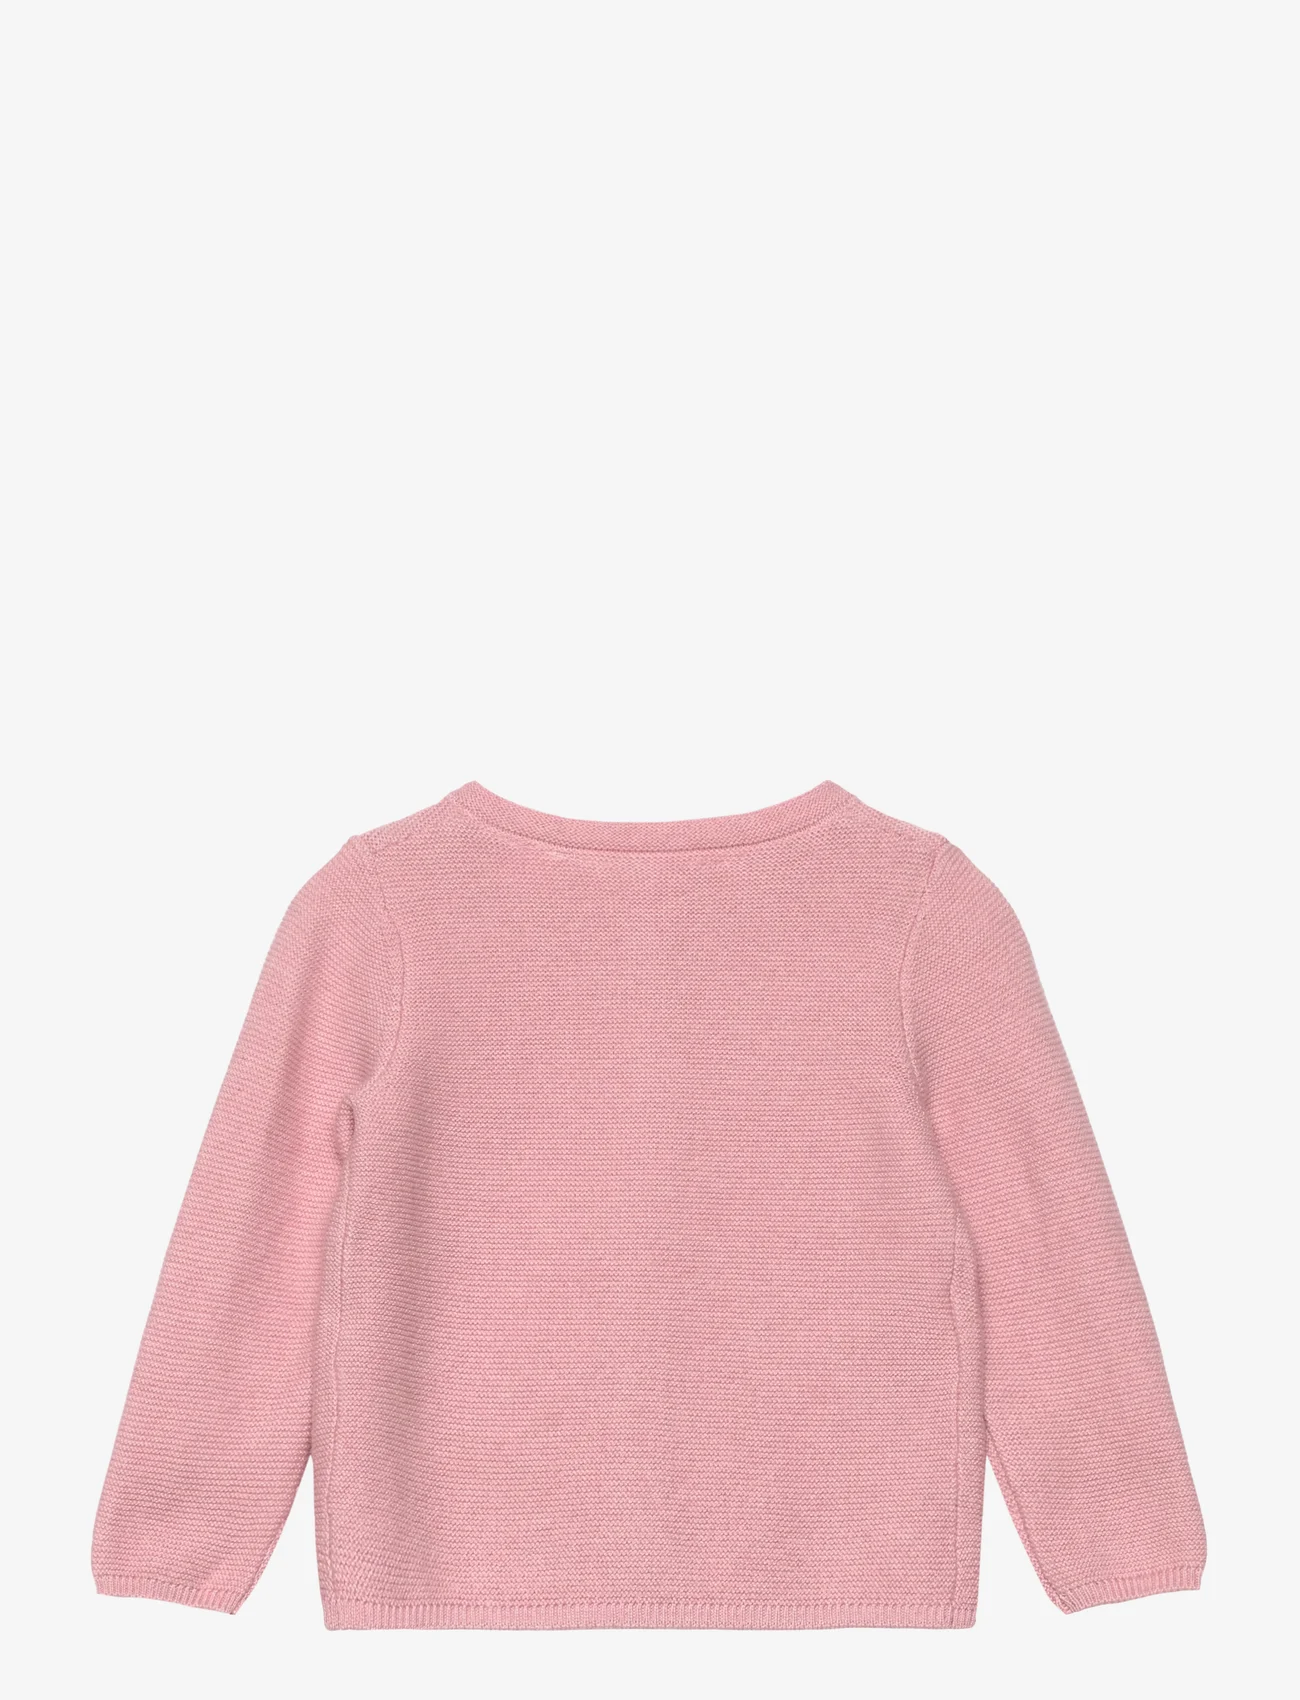 Mango - Button knit cardigan - neuletakit - lt-pastel pink - 1